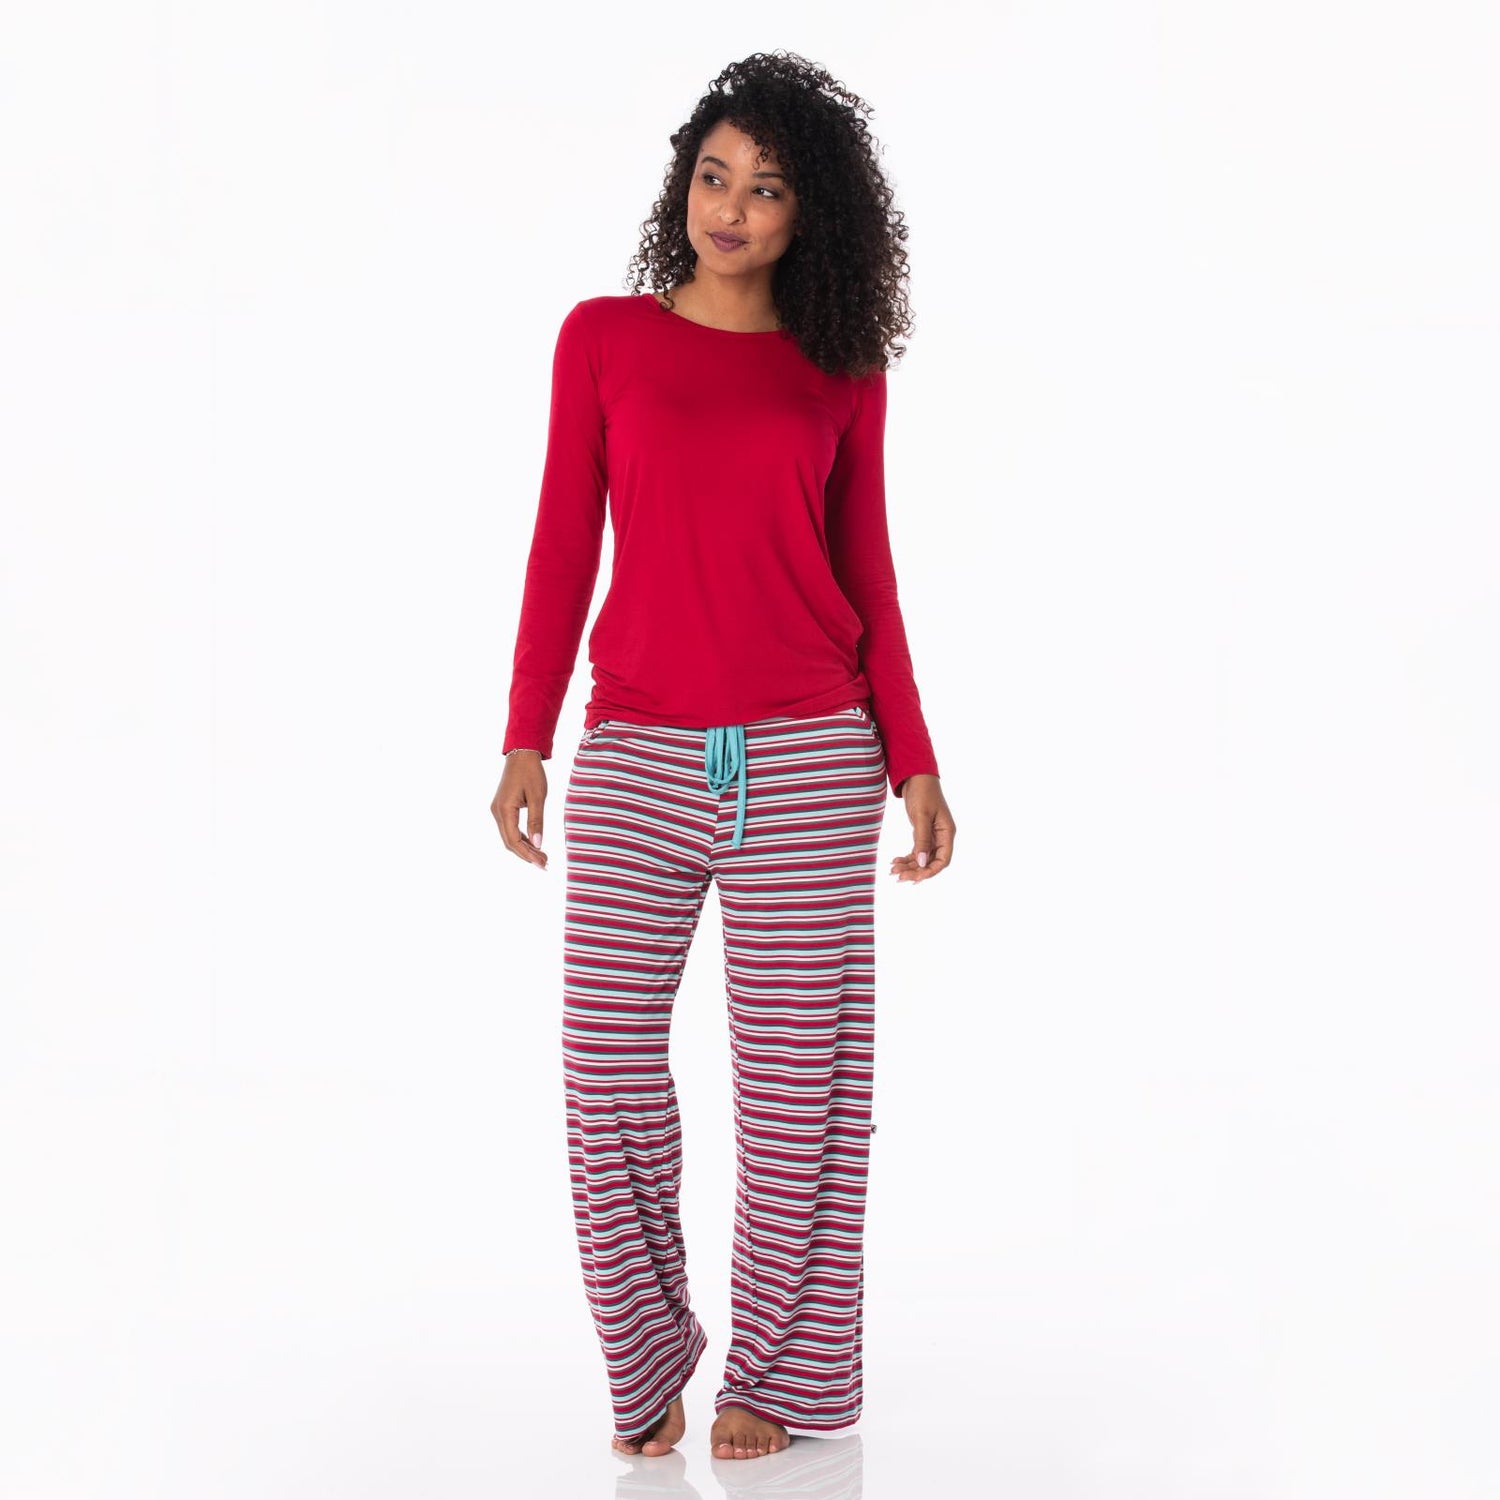 Women's Print Lounge Pants in Christmas Stripe